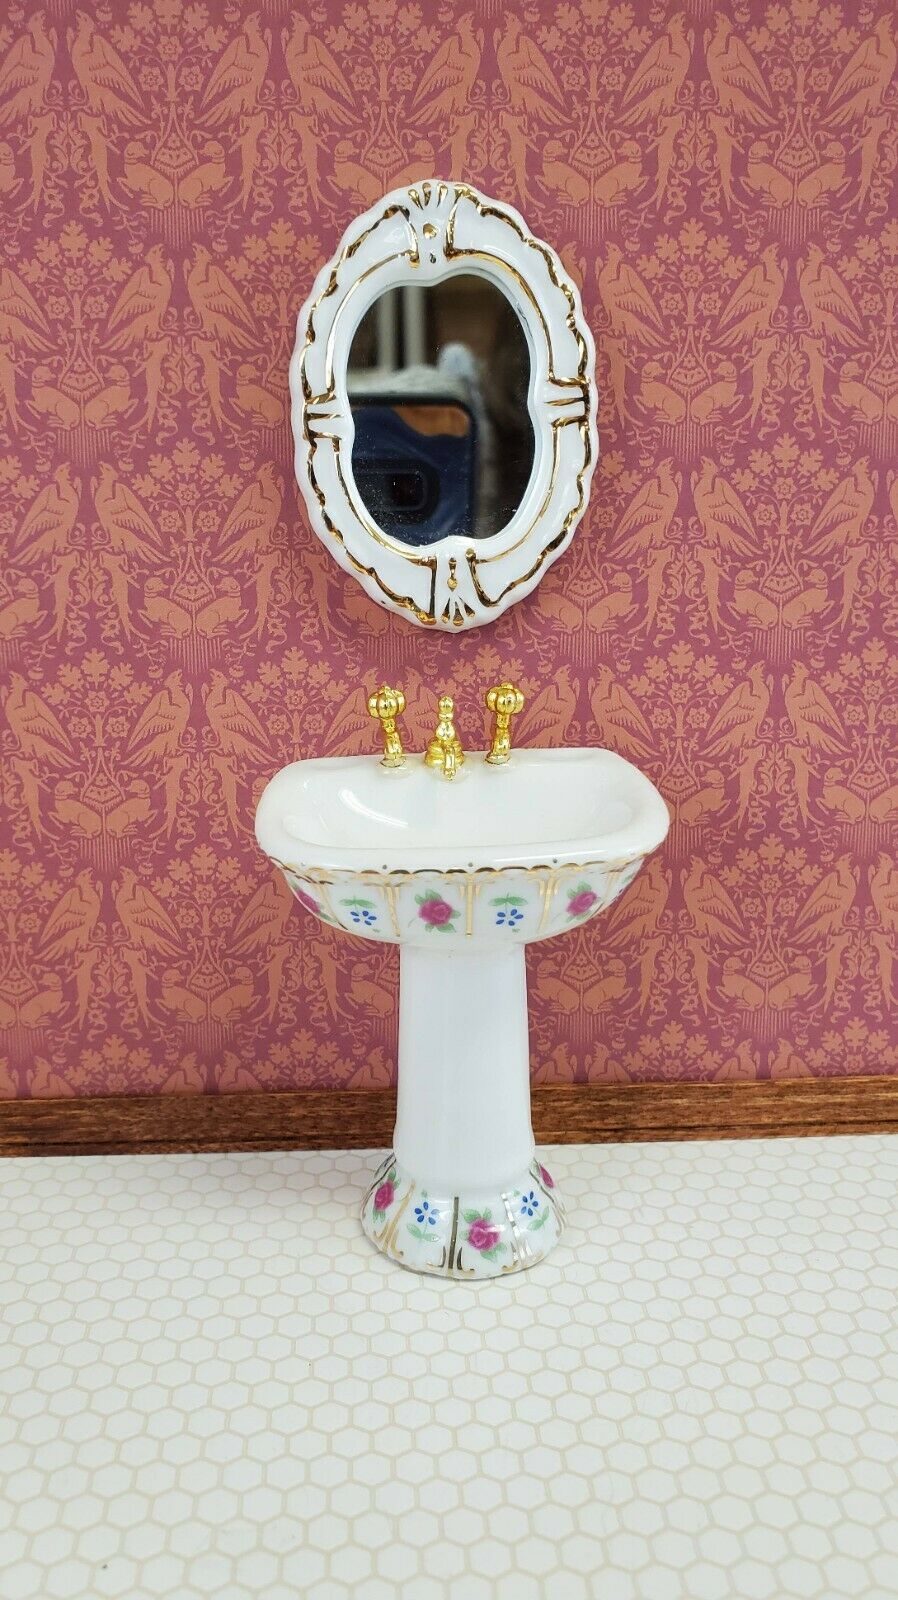 Dollhouse Miniature Bathroom Set White Gold Rose Porcelain Tub Toilet Sink - Miniature Crush